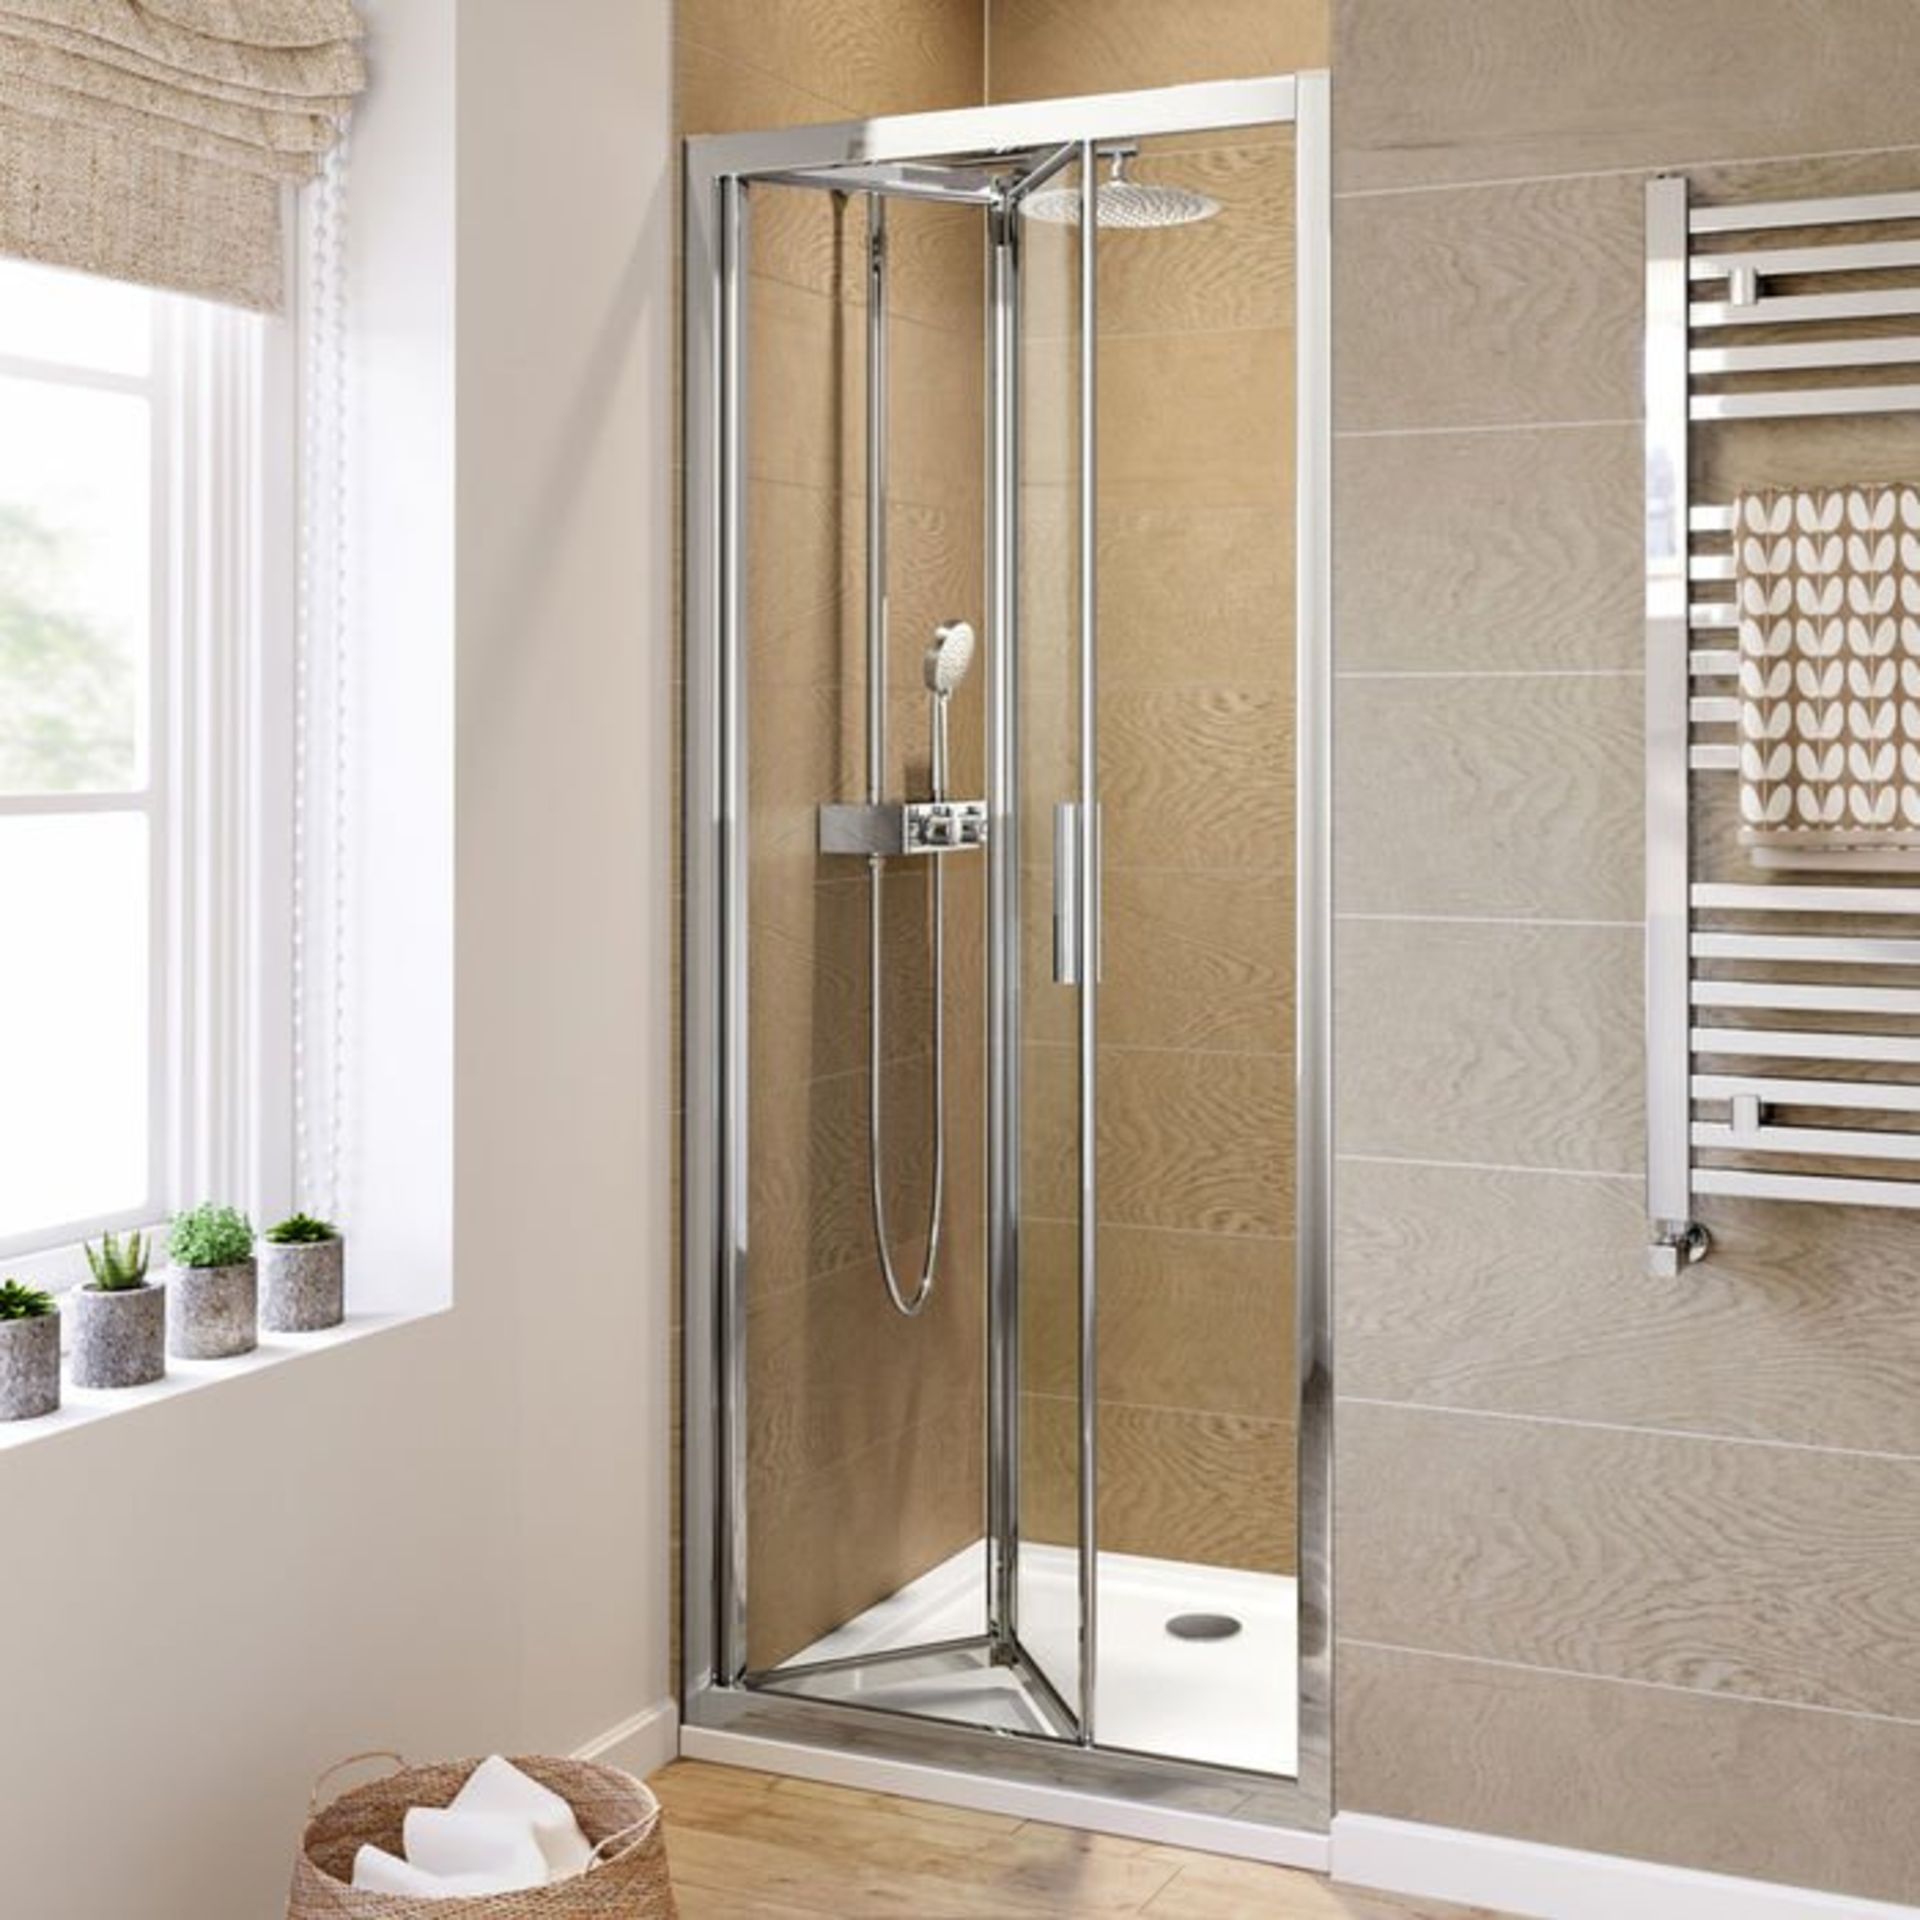 (K93) 760mm - 6mm - Elements EasyClean Bifold Shower Door. MRRP £299.99. 6mm Safety Glass - Single- - Image 2 of 2